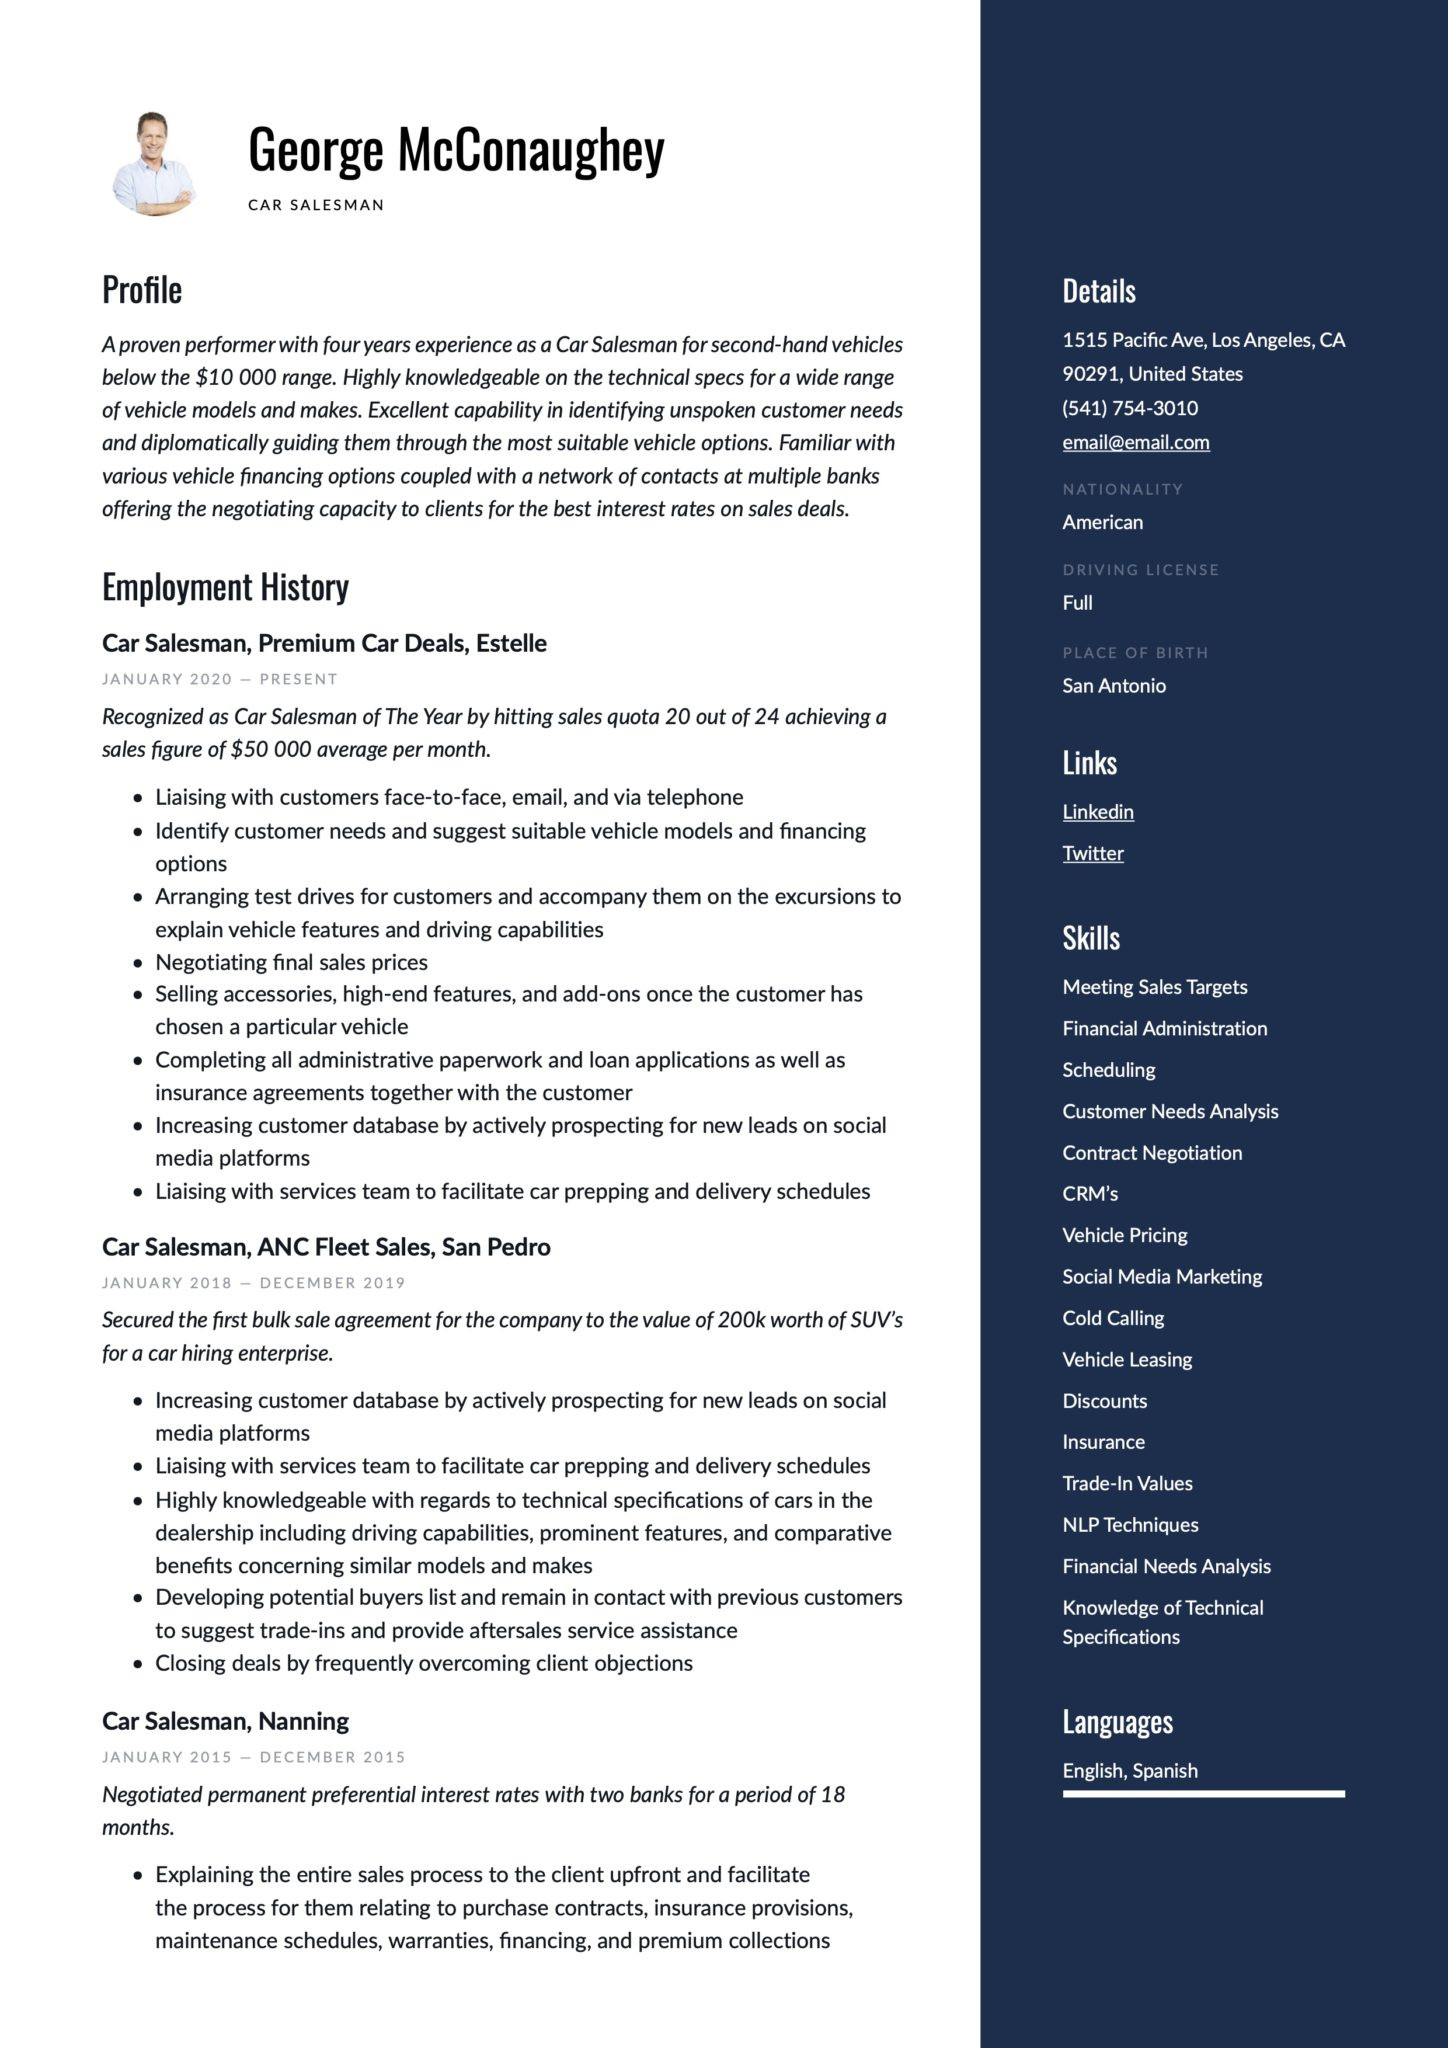 Car Salesman Job Description Resume Sample Car Salesman Resume & Writing Guide  17 Resume Templates 2021